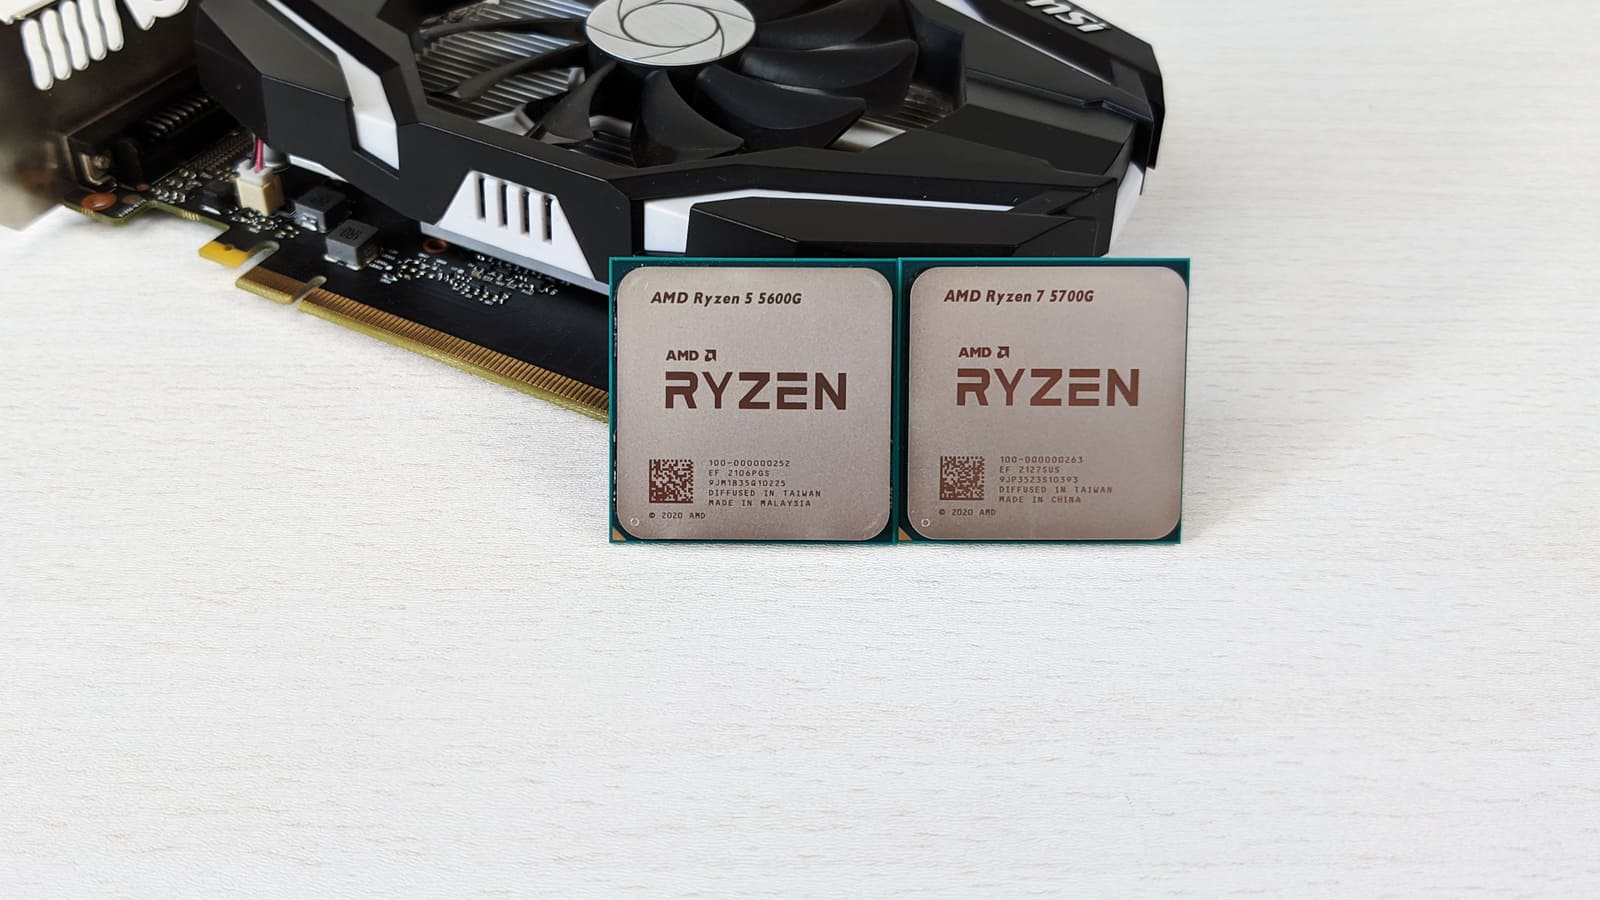 Amd ryzen 5600 g. Ryzen 7 5700g. AMD 5 5600g. Райзен 5 5600g. Процессор AMD Ryzen 5 5600g Box.